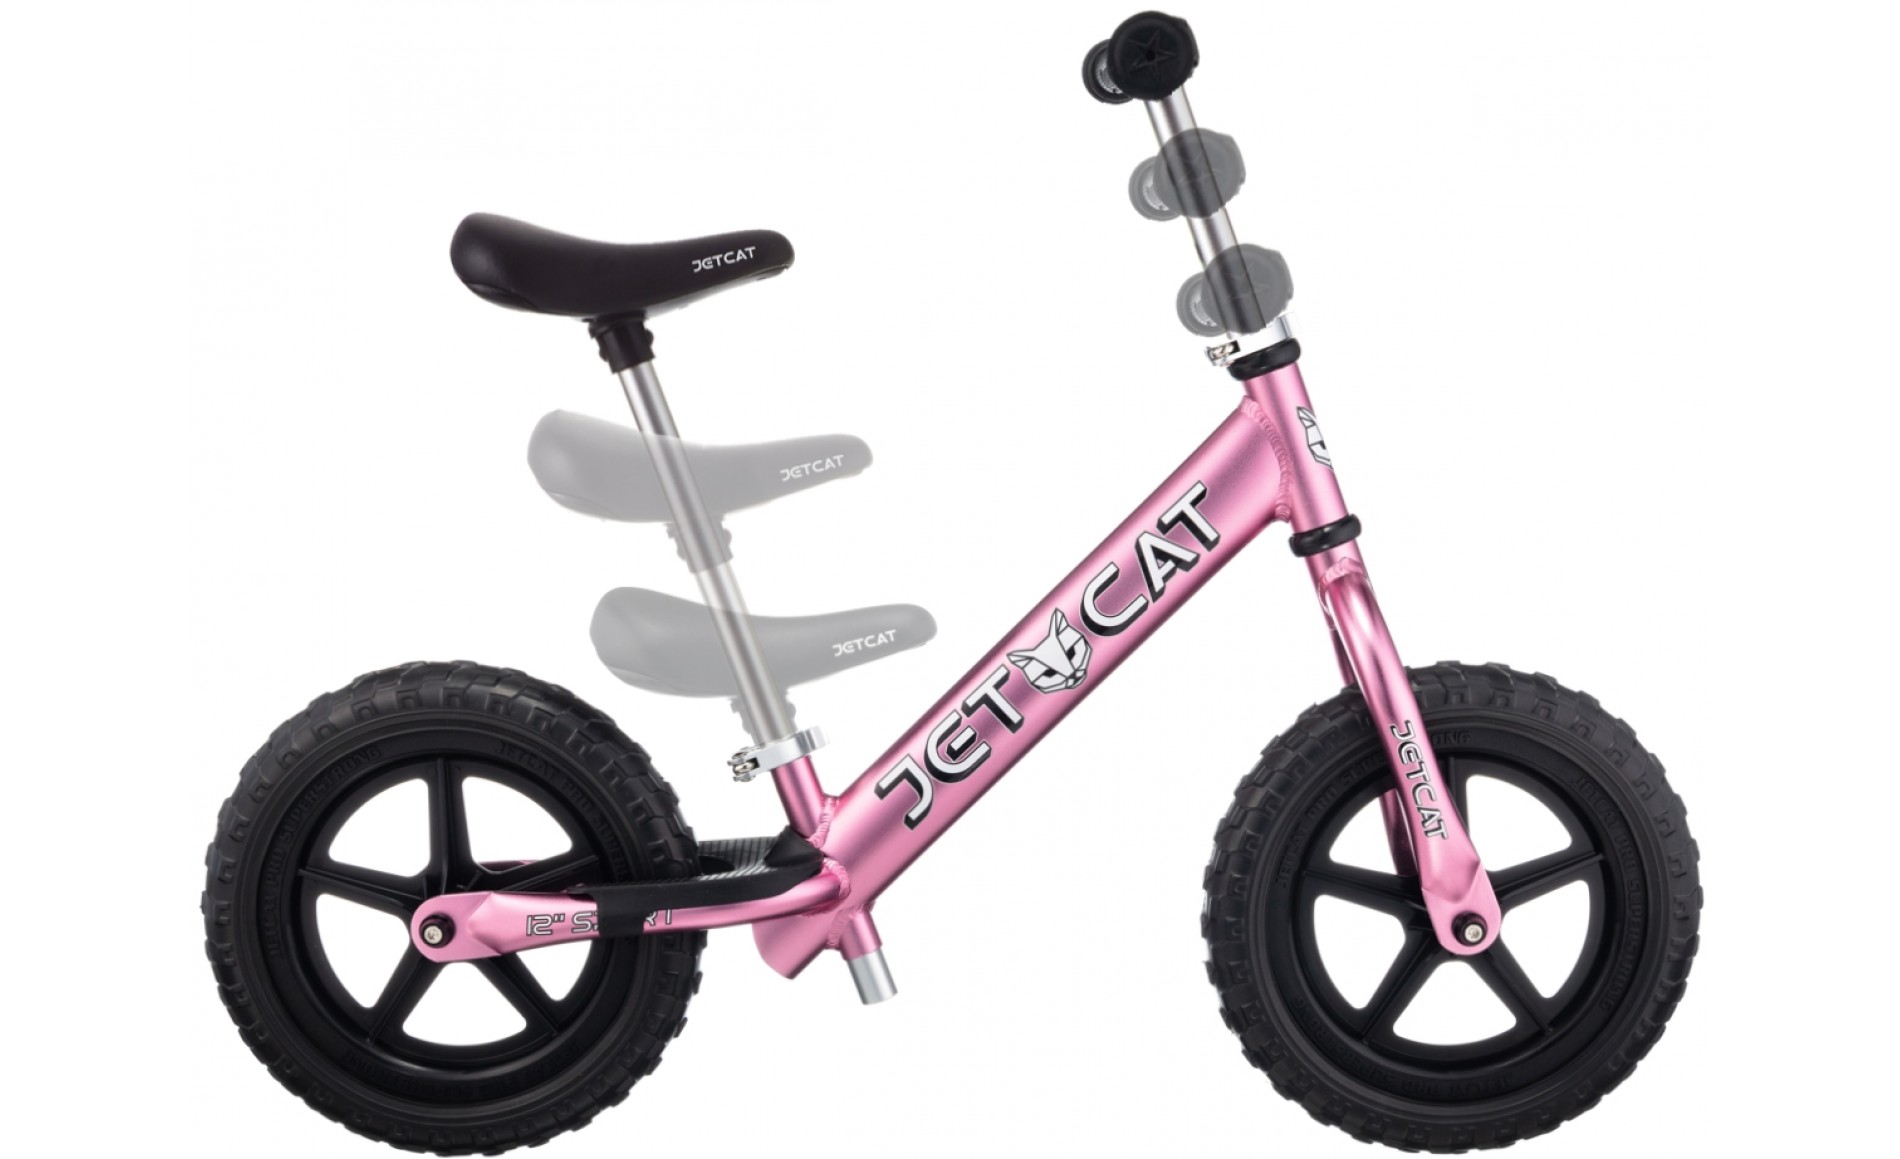 JETCAT беговел. JETCAT беговел с тормозами. JETCAT беговелы. Детский велосипед JETCAT Race Pro 16 Base Pink Pearl.